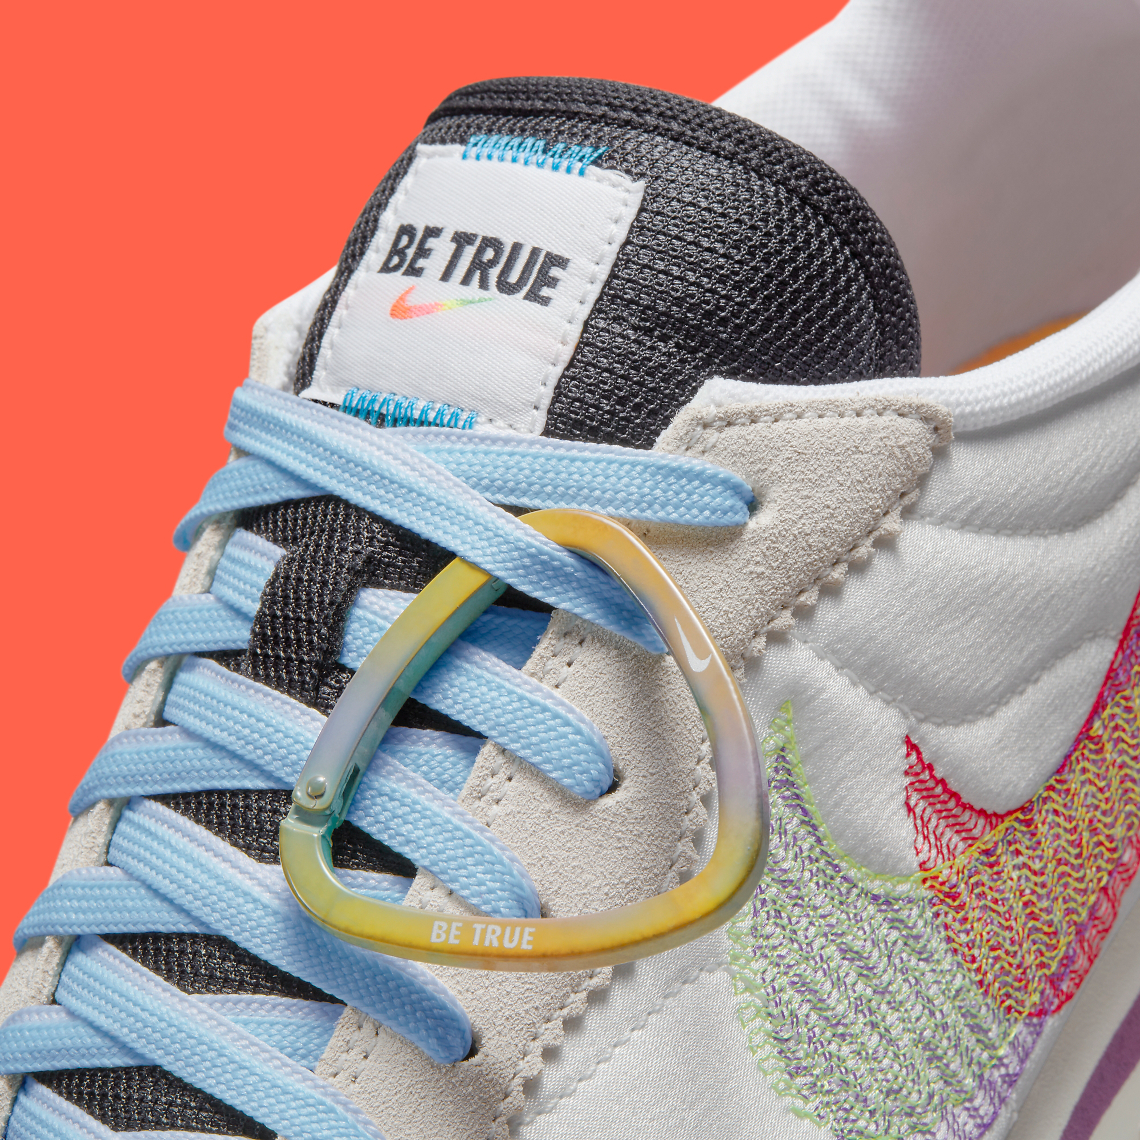 Nike Cortez Be True Dr5491 100 10